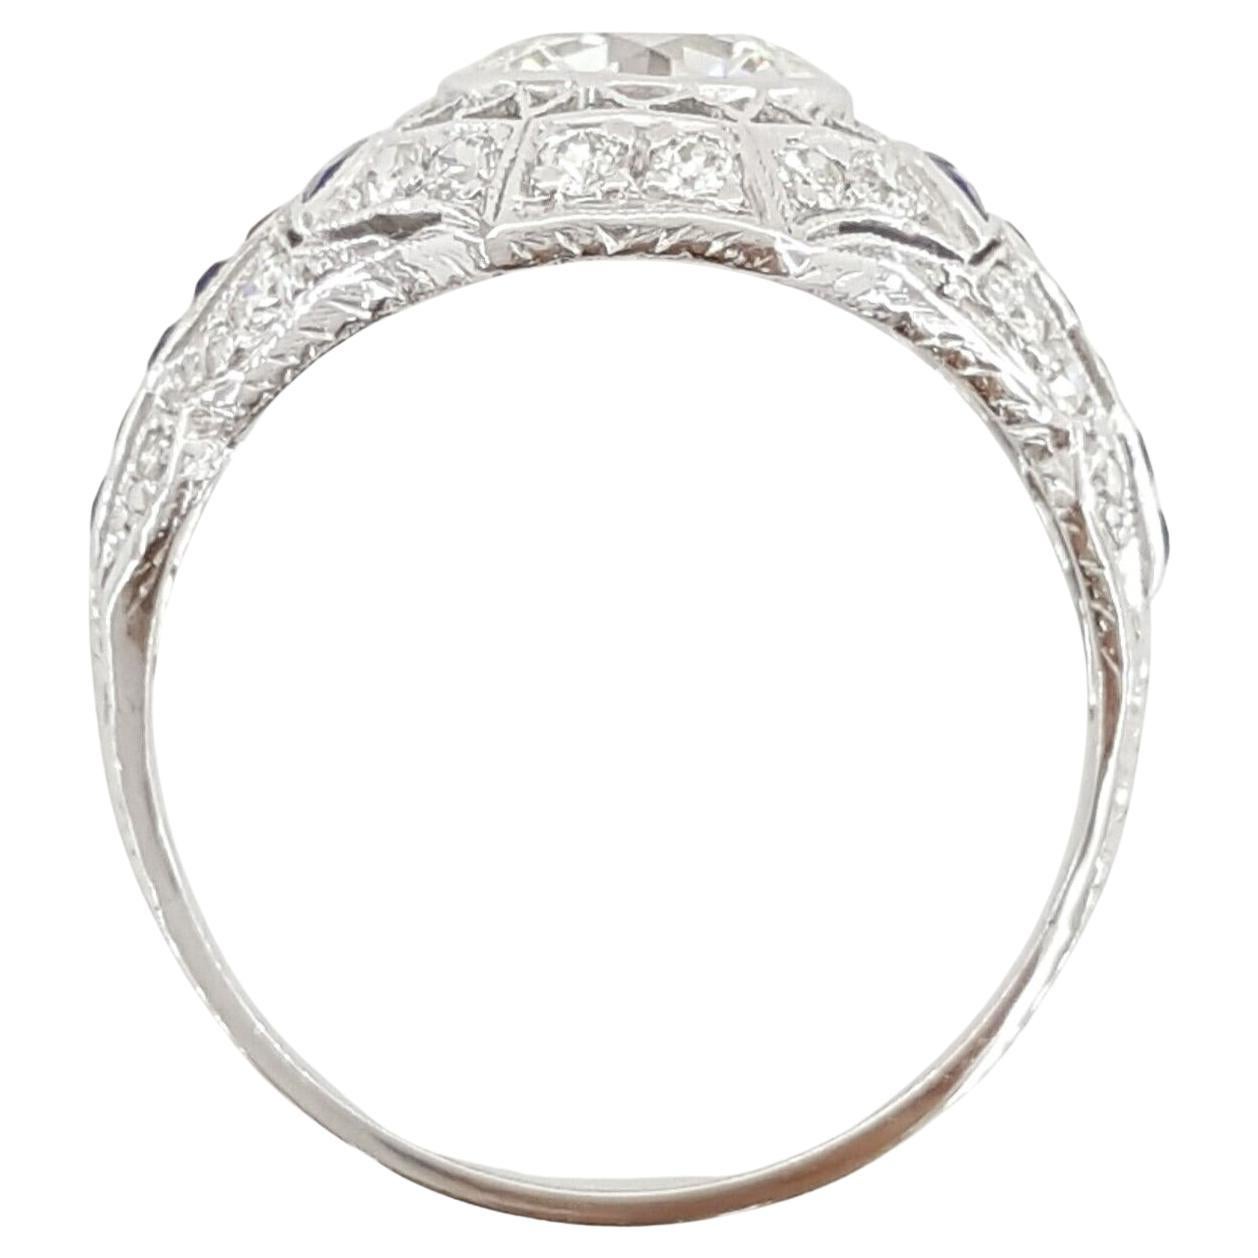 An exquisite authentic art deco platinum old european round brilliant cut diamond and sapphire engagement ring.
